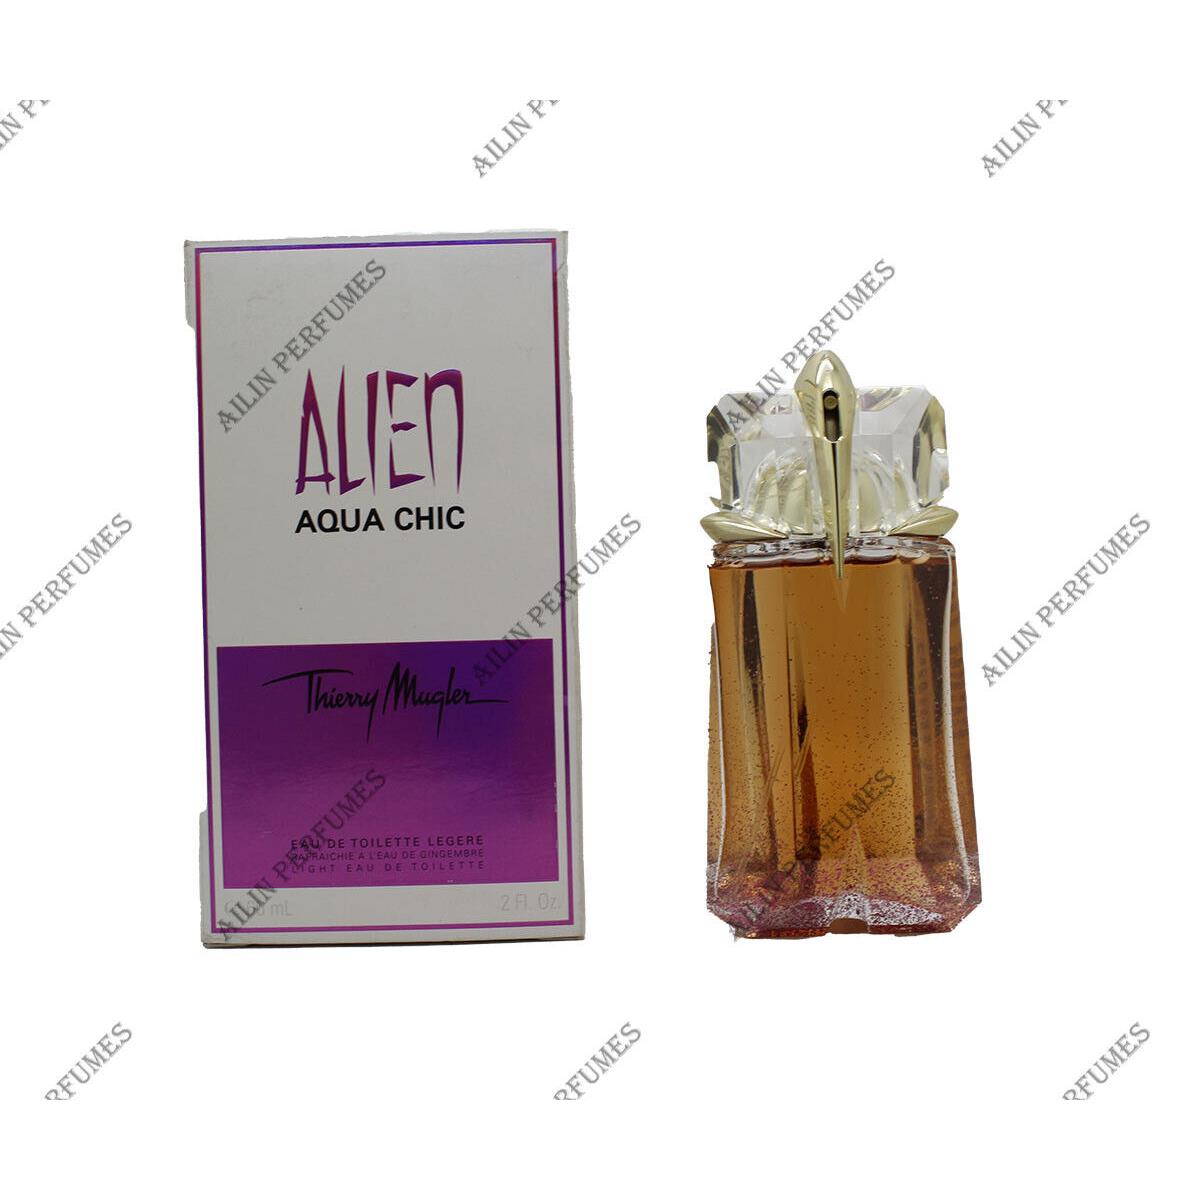 Alien Aqua Chic by Thierry Mugler 1.7 oz 50 ml Eau de Toilette Spray For Women